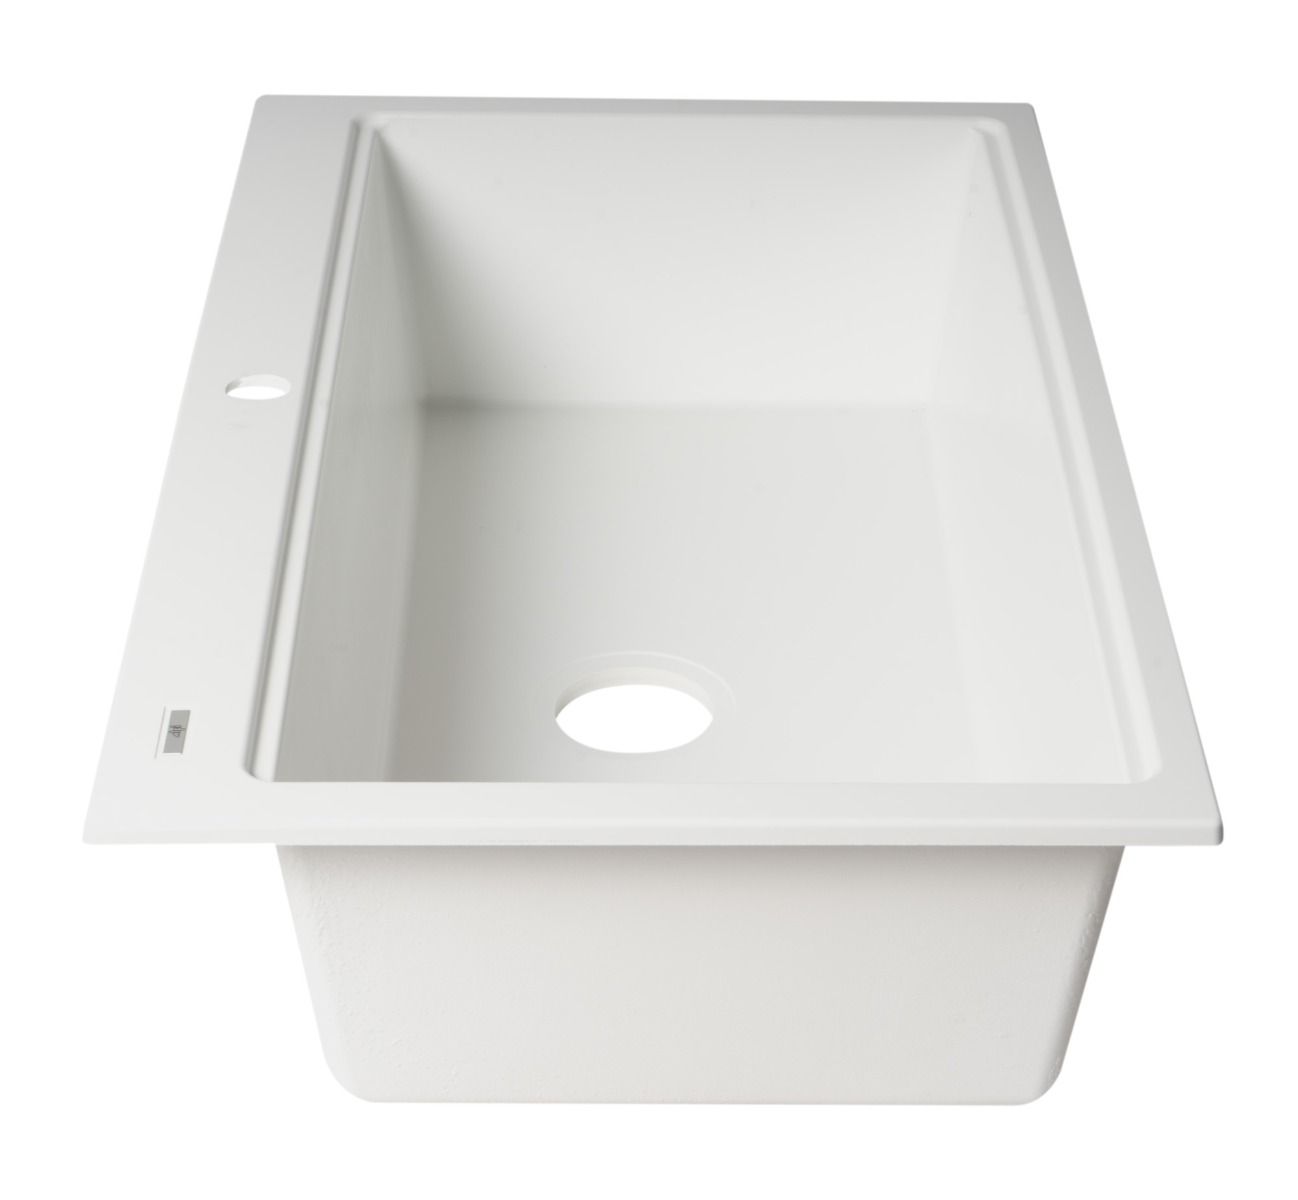 ALFI brand - White 33" Granite Composite Workstation Step Rim Single Bowl Drop In Sink with Accessories - AB3418SBDI-W